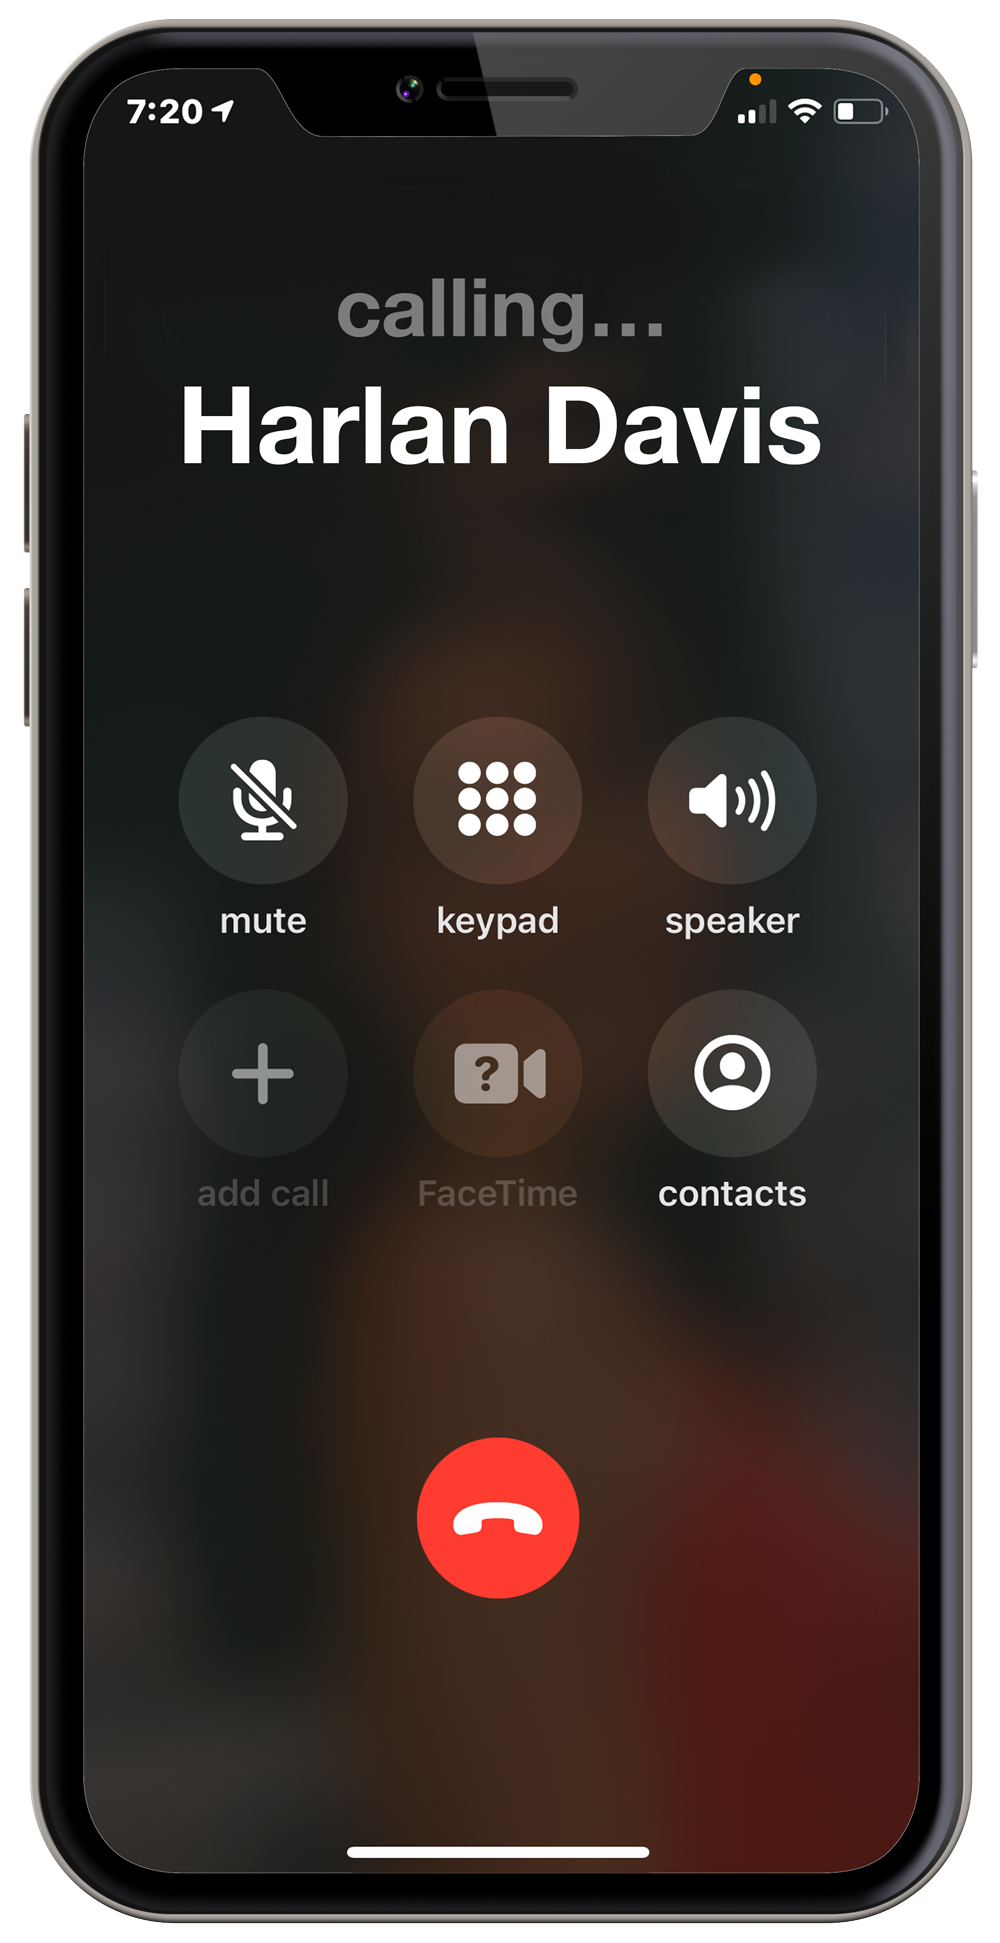 iPhone X with screen displaying phone call screen, calling Harlan Davis.